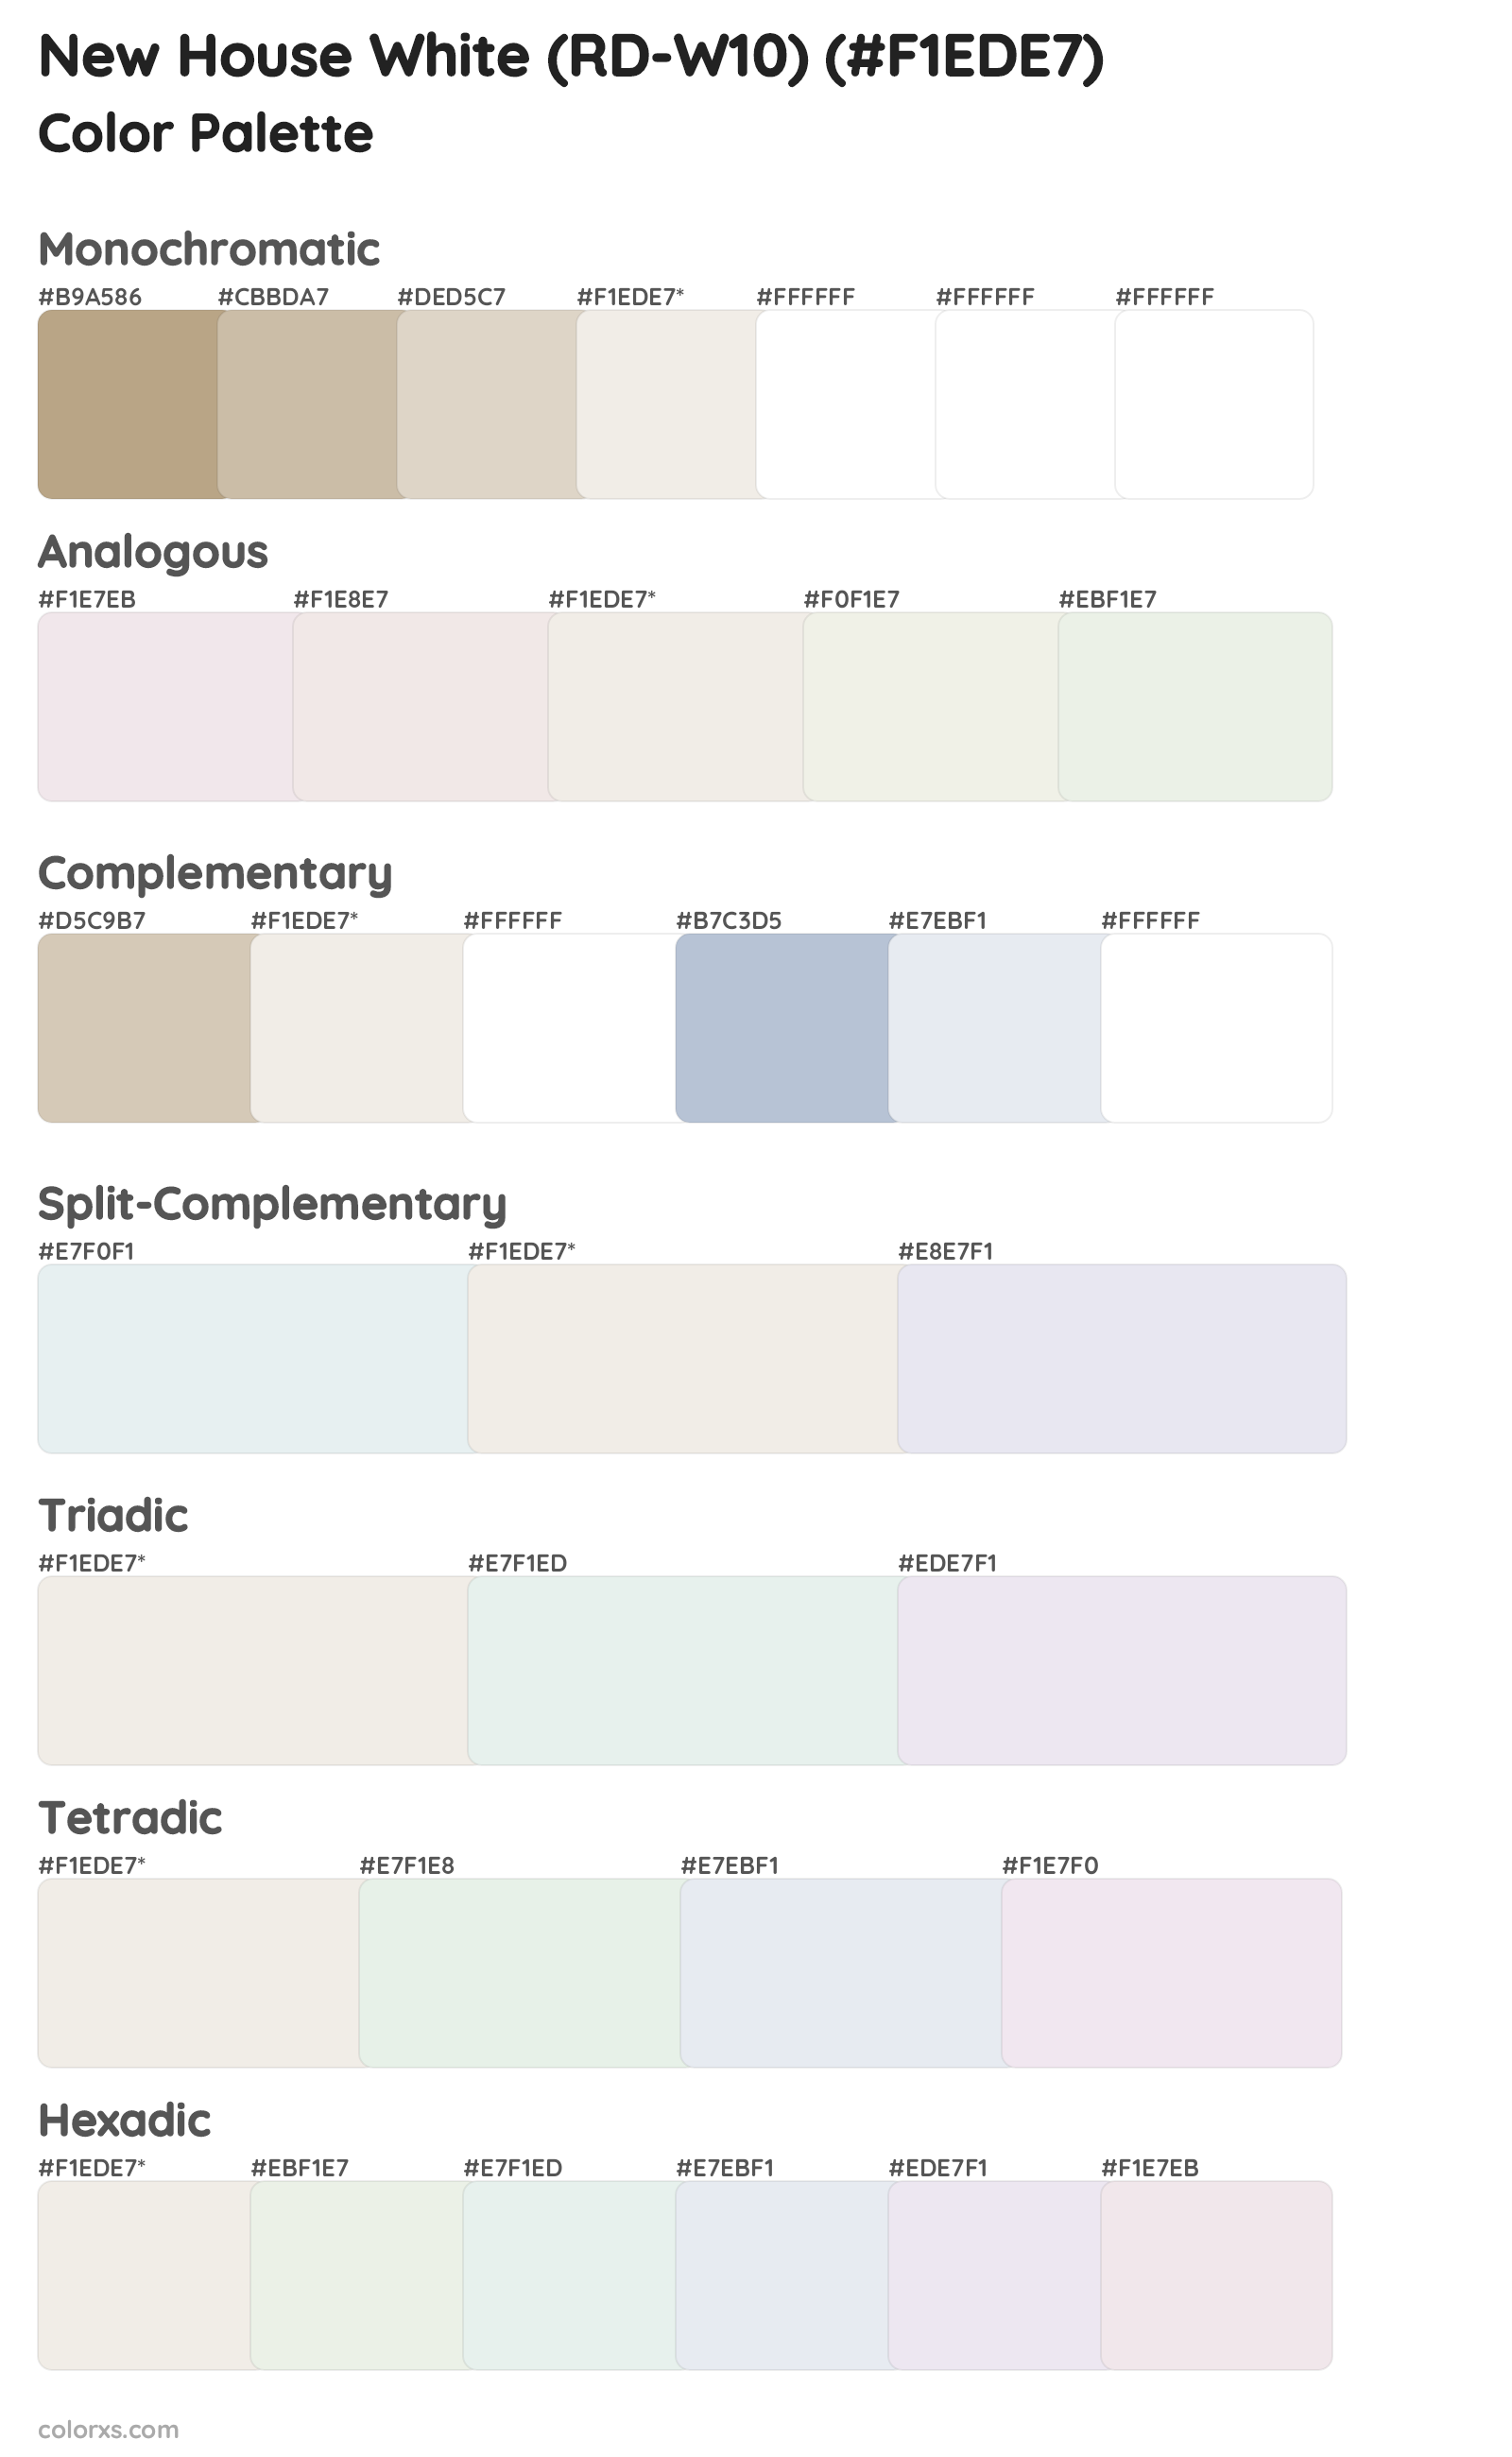 New House White (RD-W10) Color Scheme Palettes